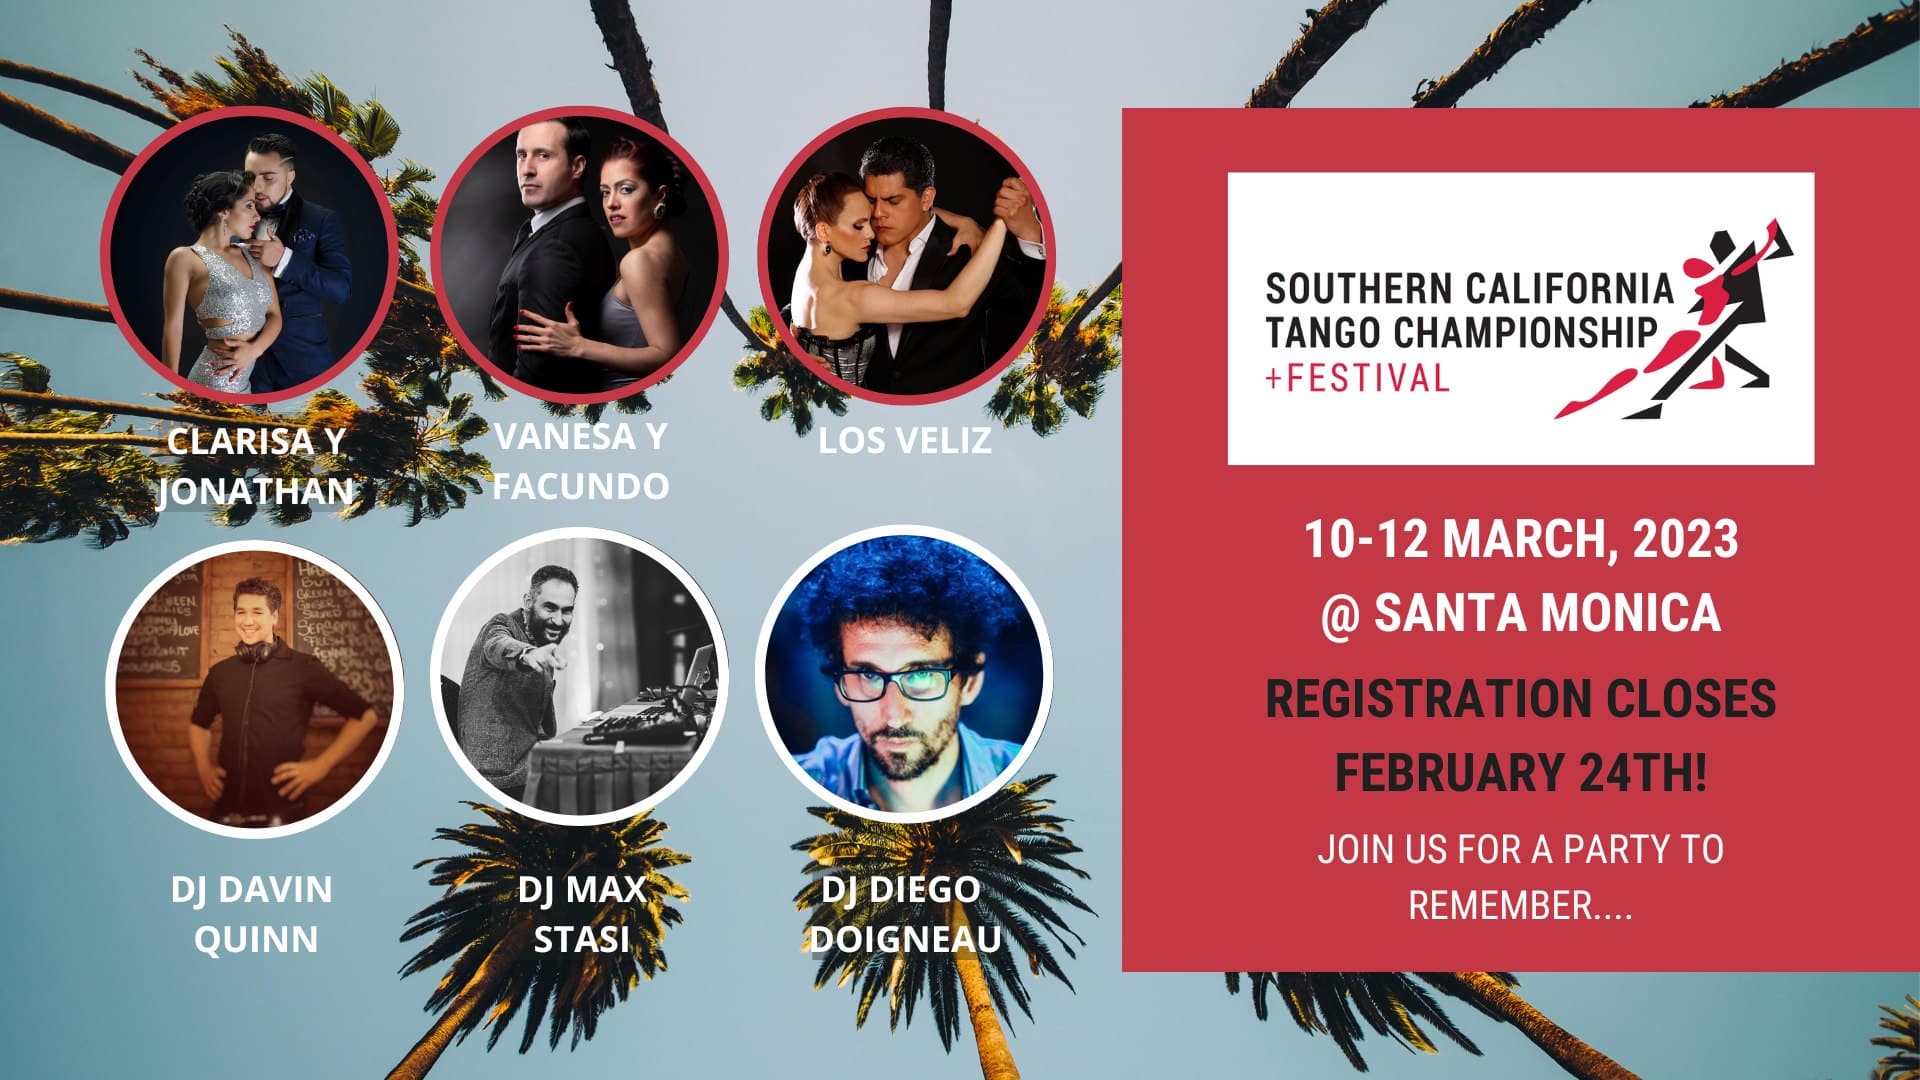 Southern California Tango Championship & Festival 2023 event picture